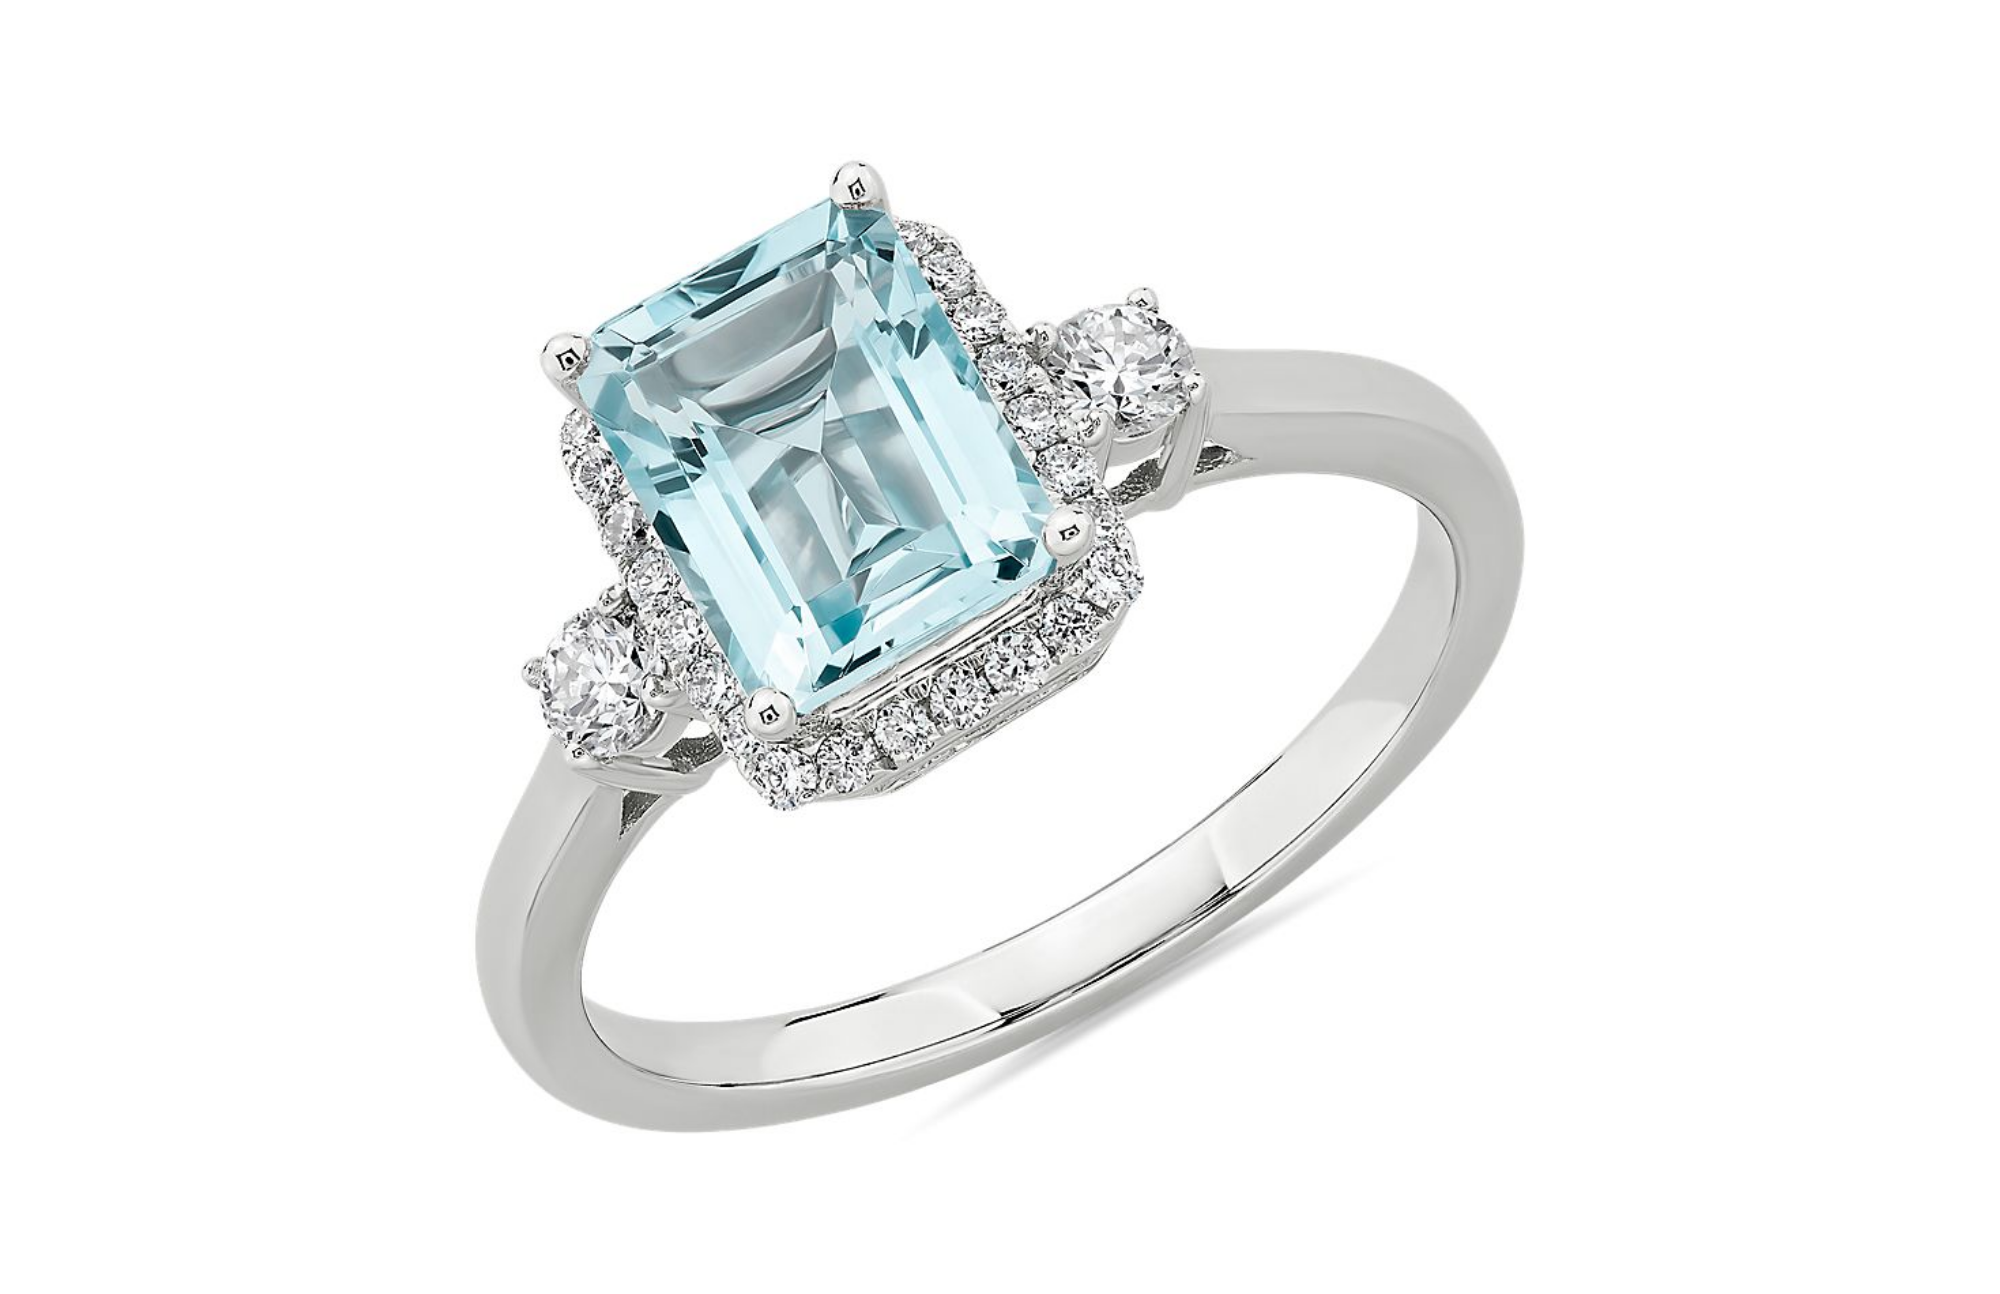 Aquamarine ring set in 14k white gold and sparkling round diamonds